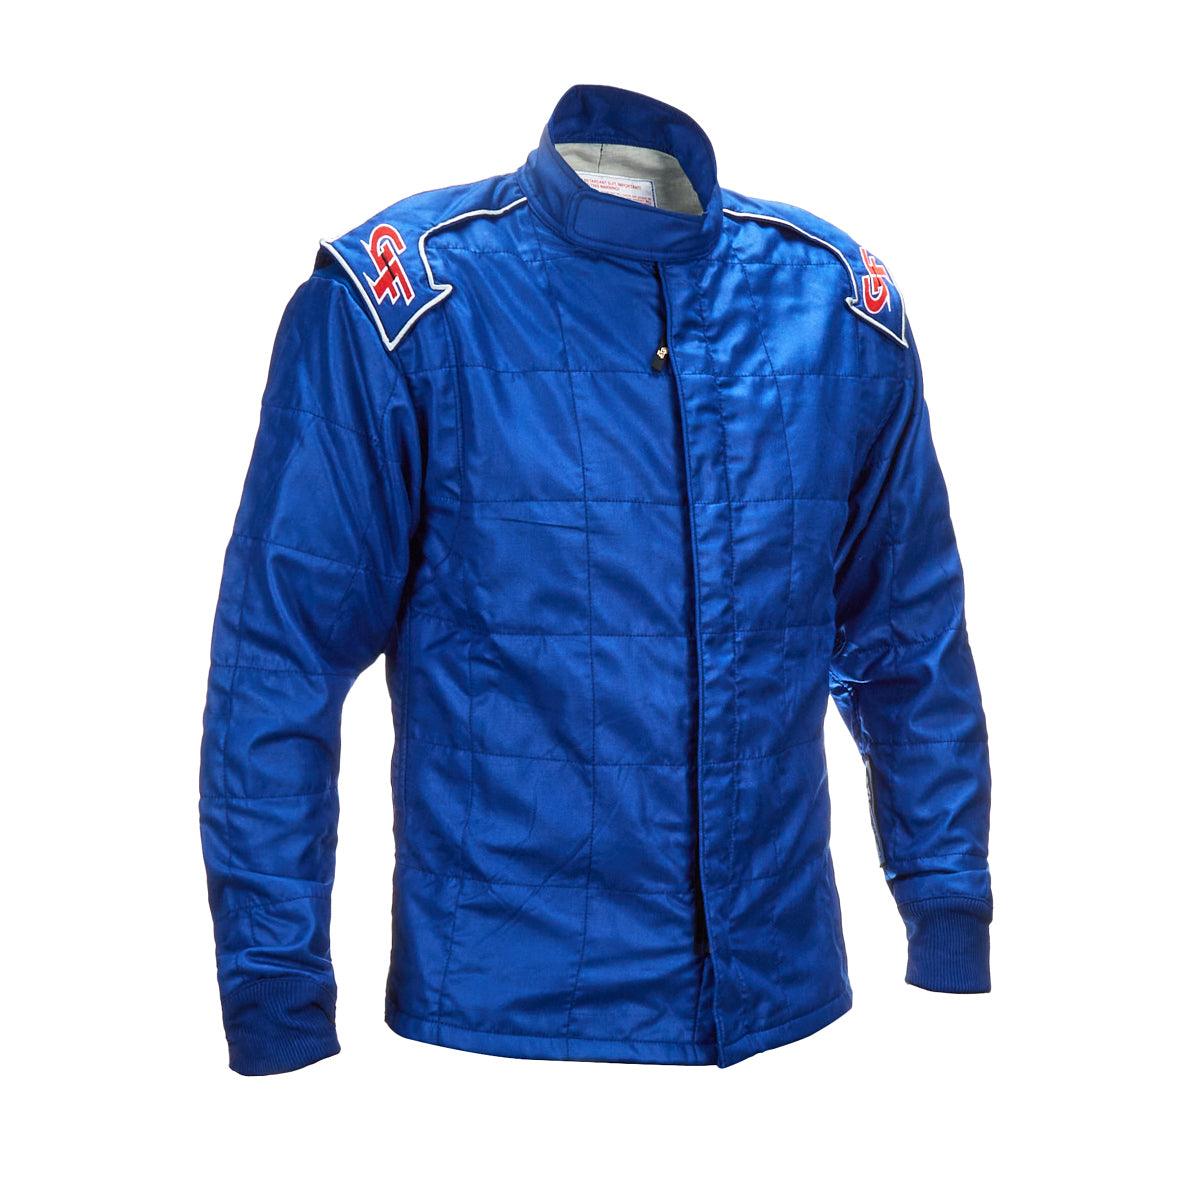 Jacket G-Limit Large Blue SFI-5 - Burlile Performance Products